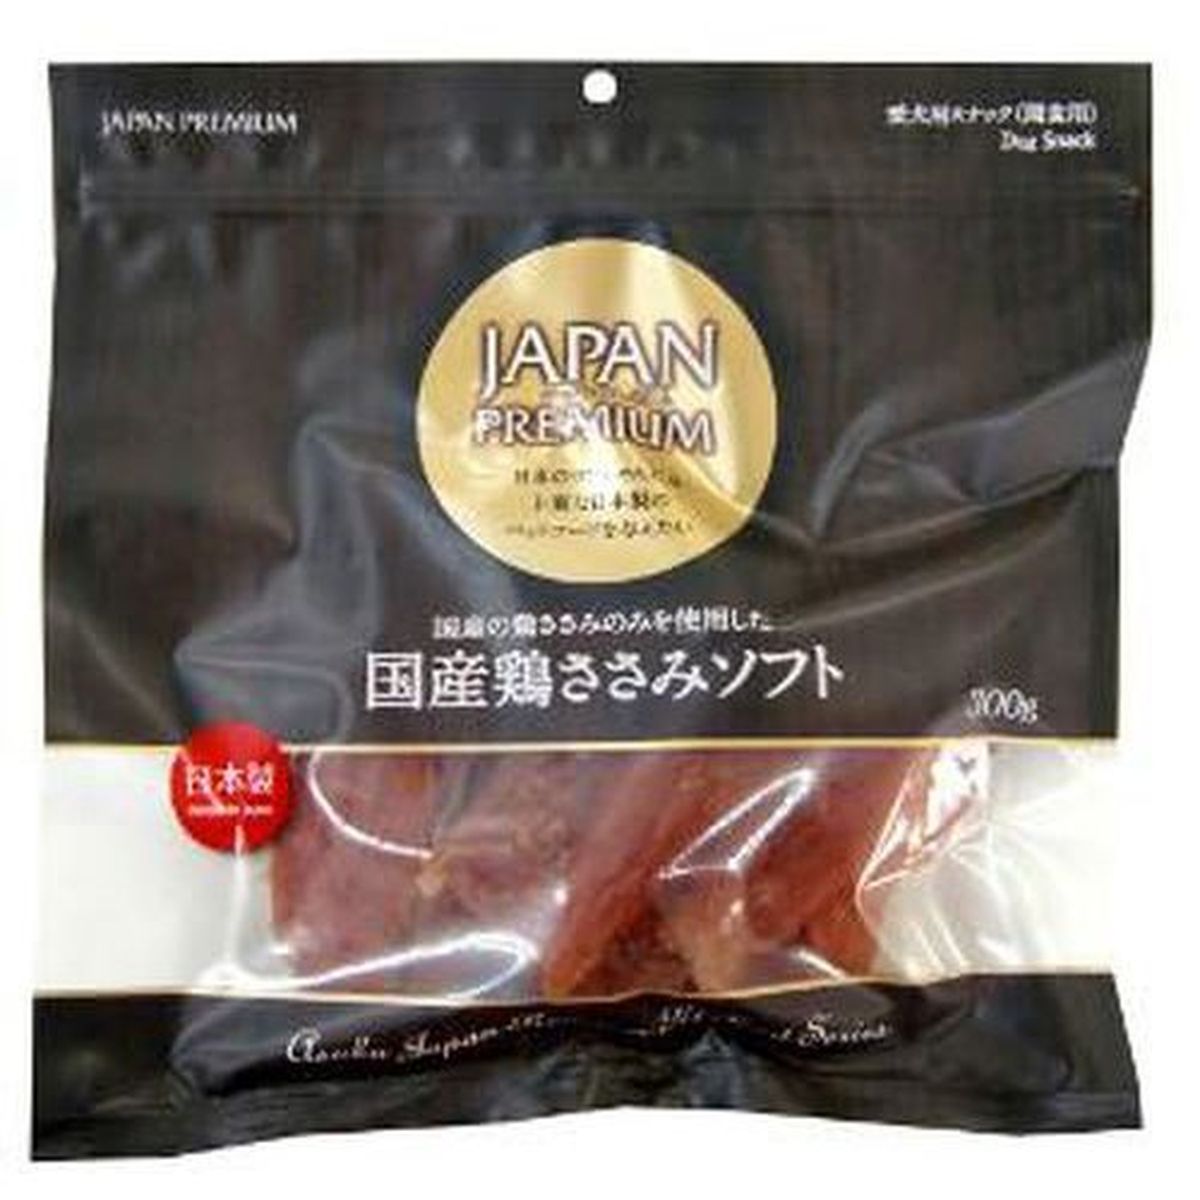 JAPAN PREMIUM 国産鶏ササミソフト 300g×24